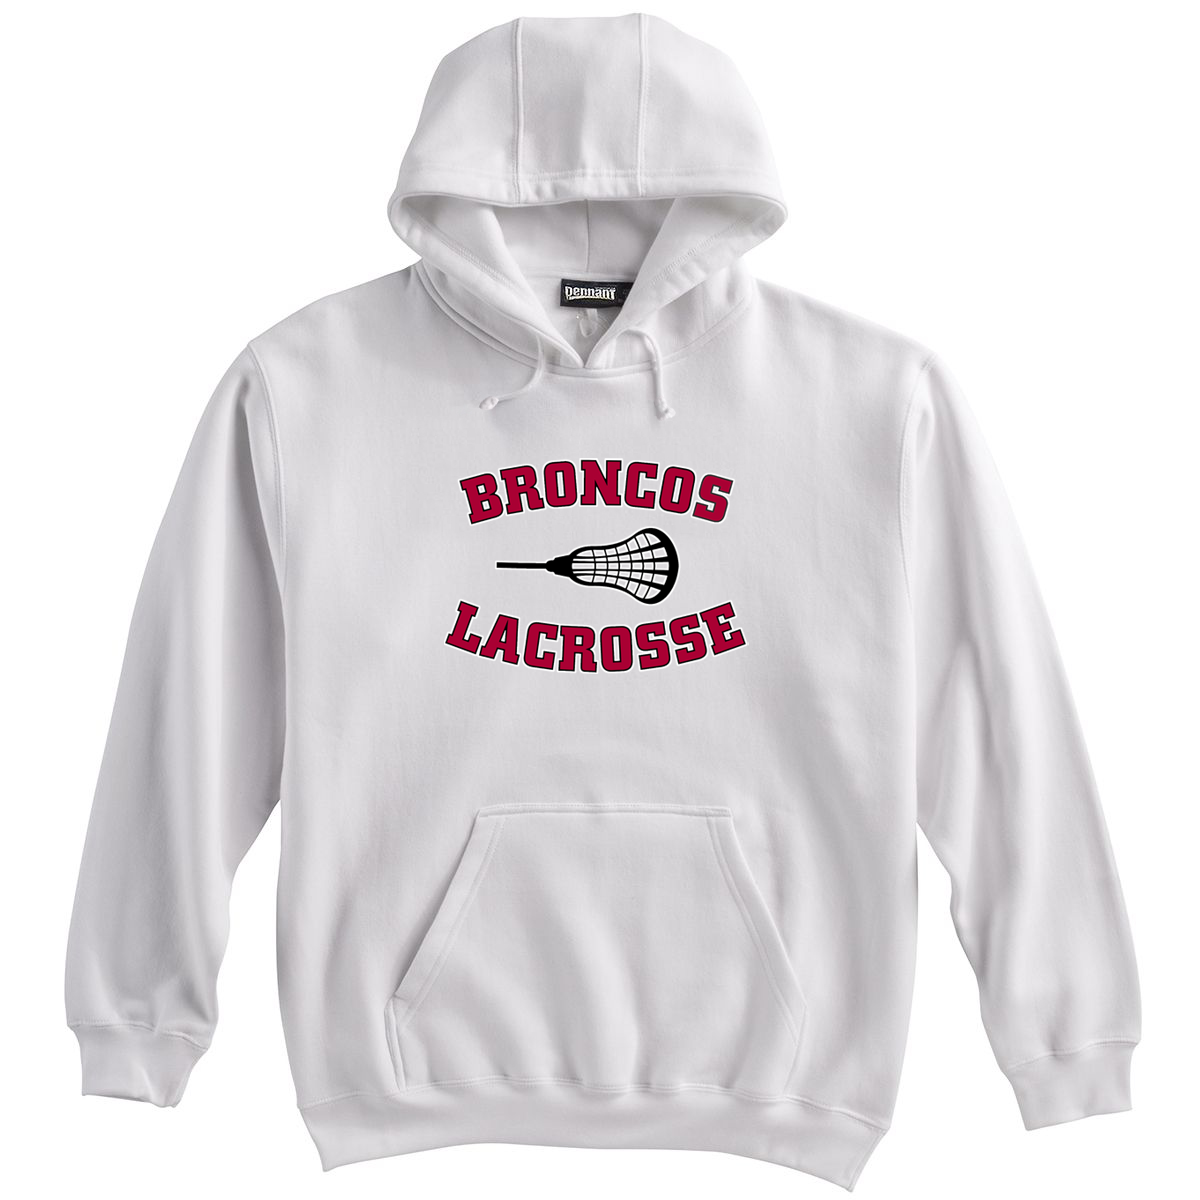 Bailey Middle School Lacrosse Sweatshirt